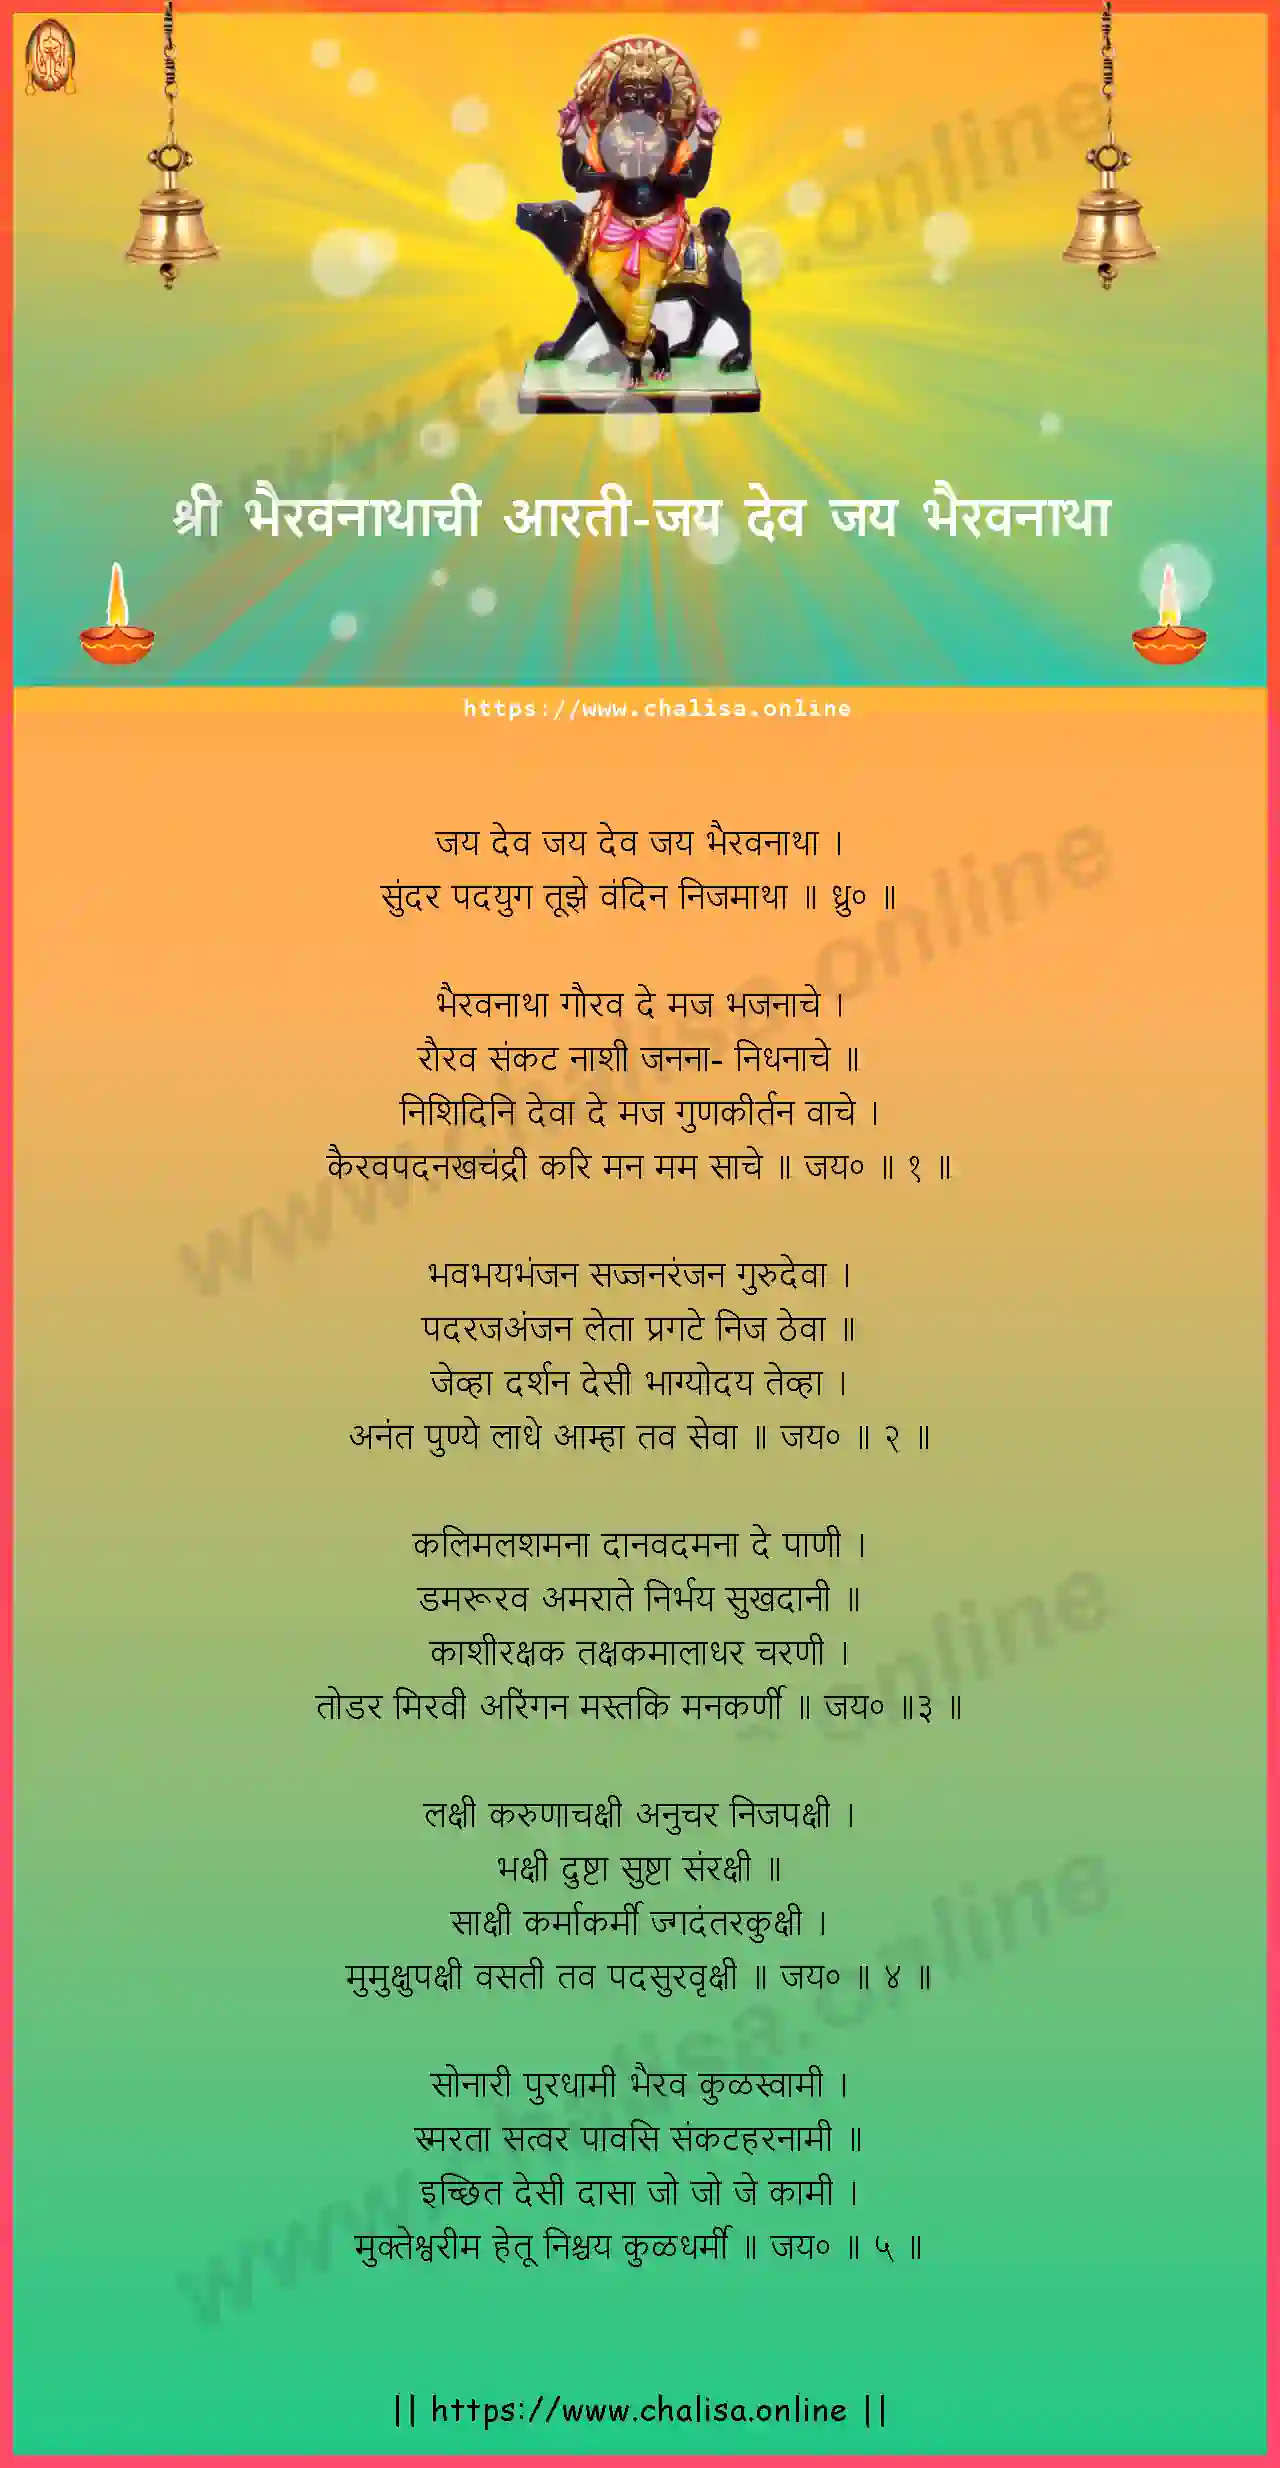 jai-dev-jai-bhairavnatha-bhairavnatha-aarti-marathi-lyrics-download